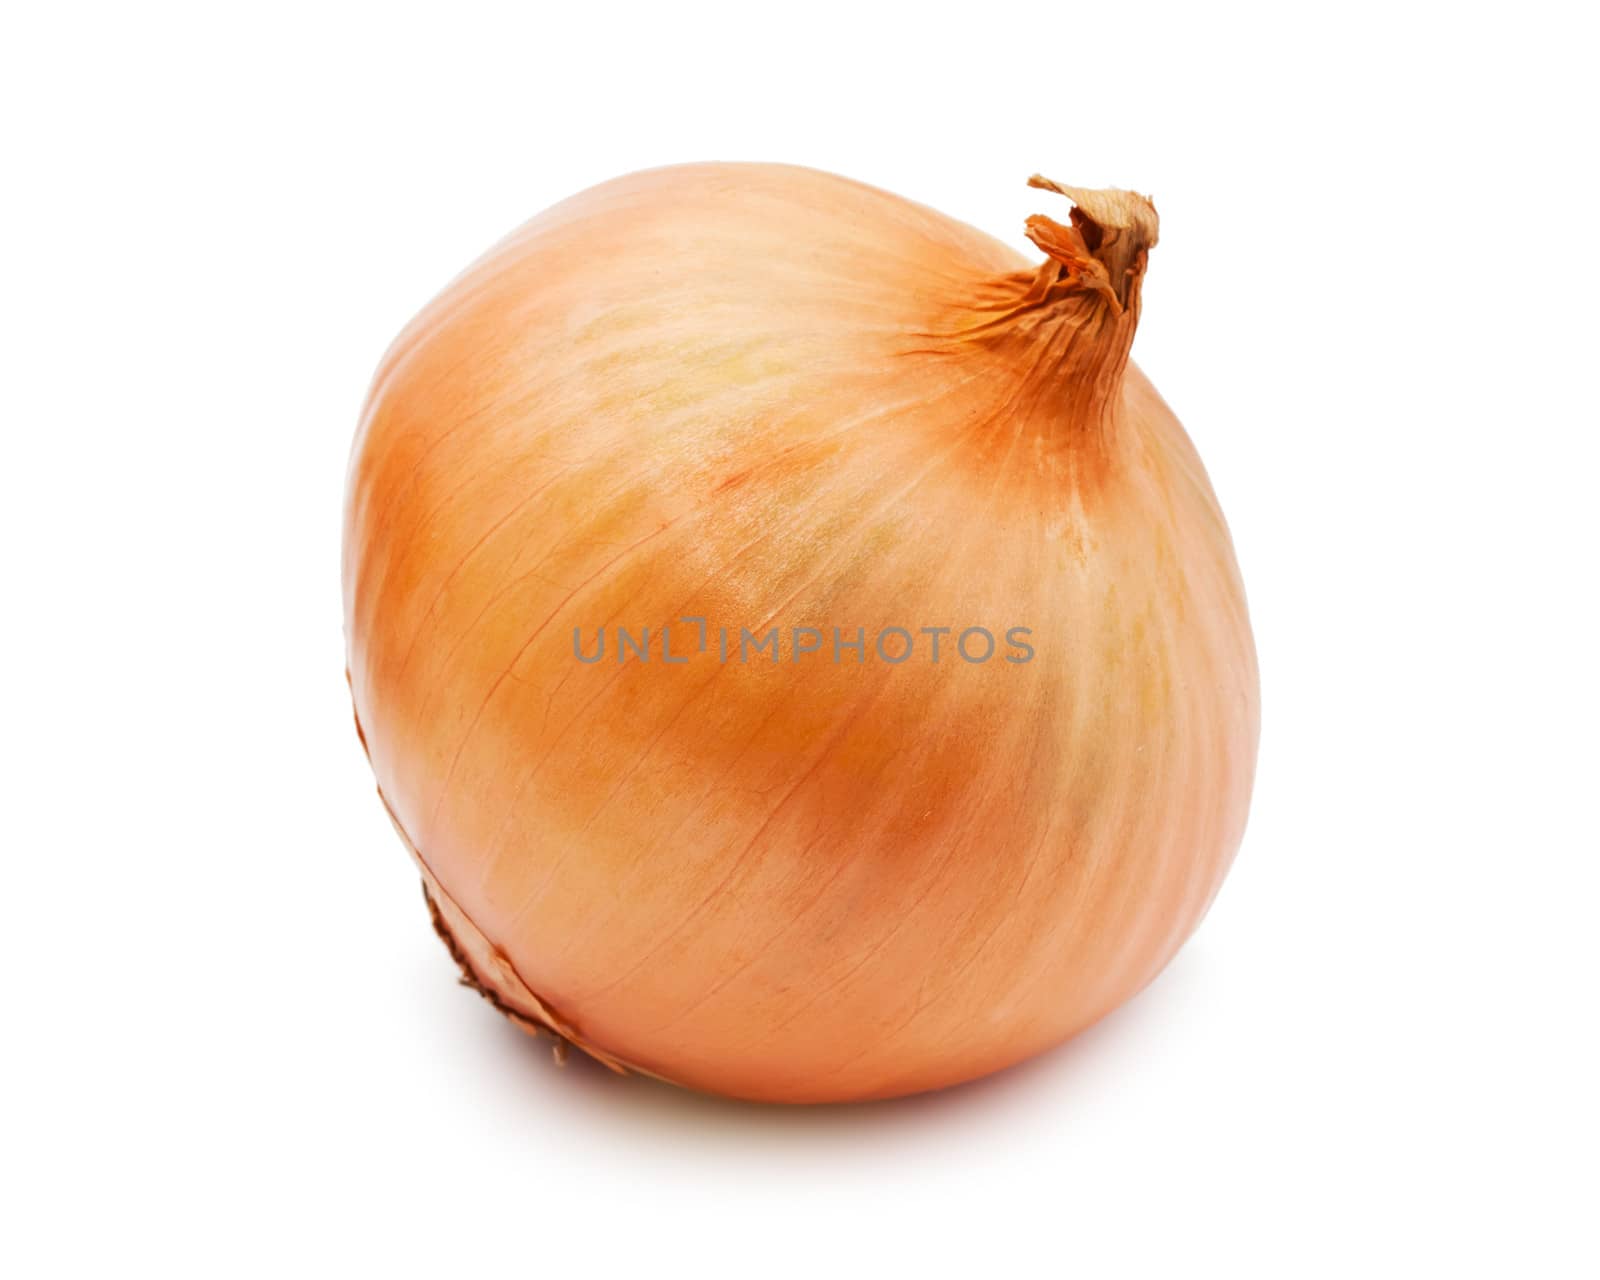 Onion by sailorr